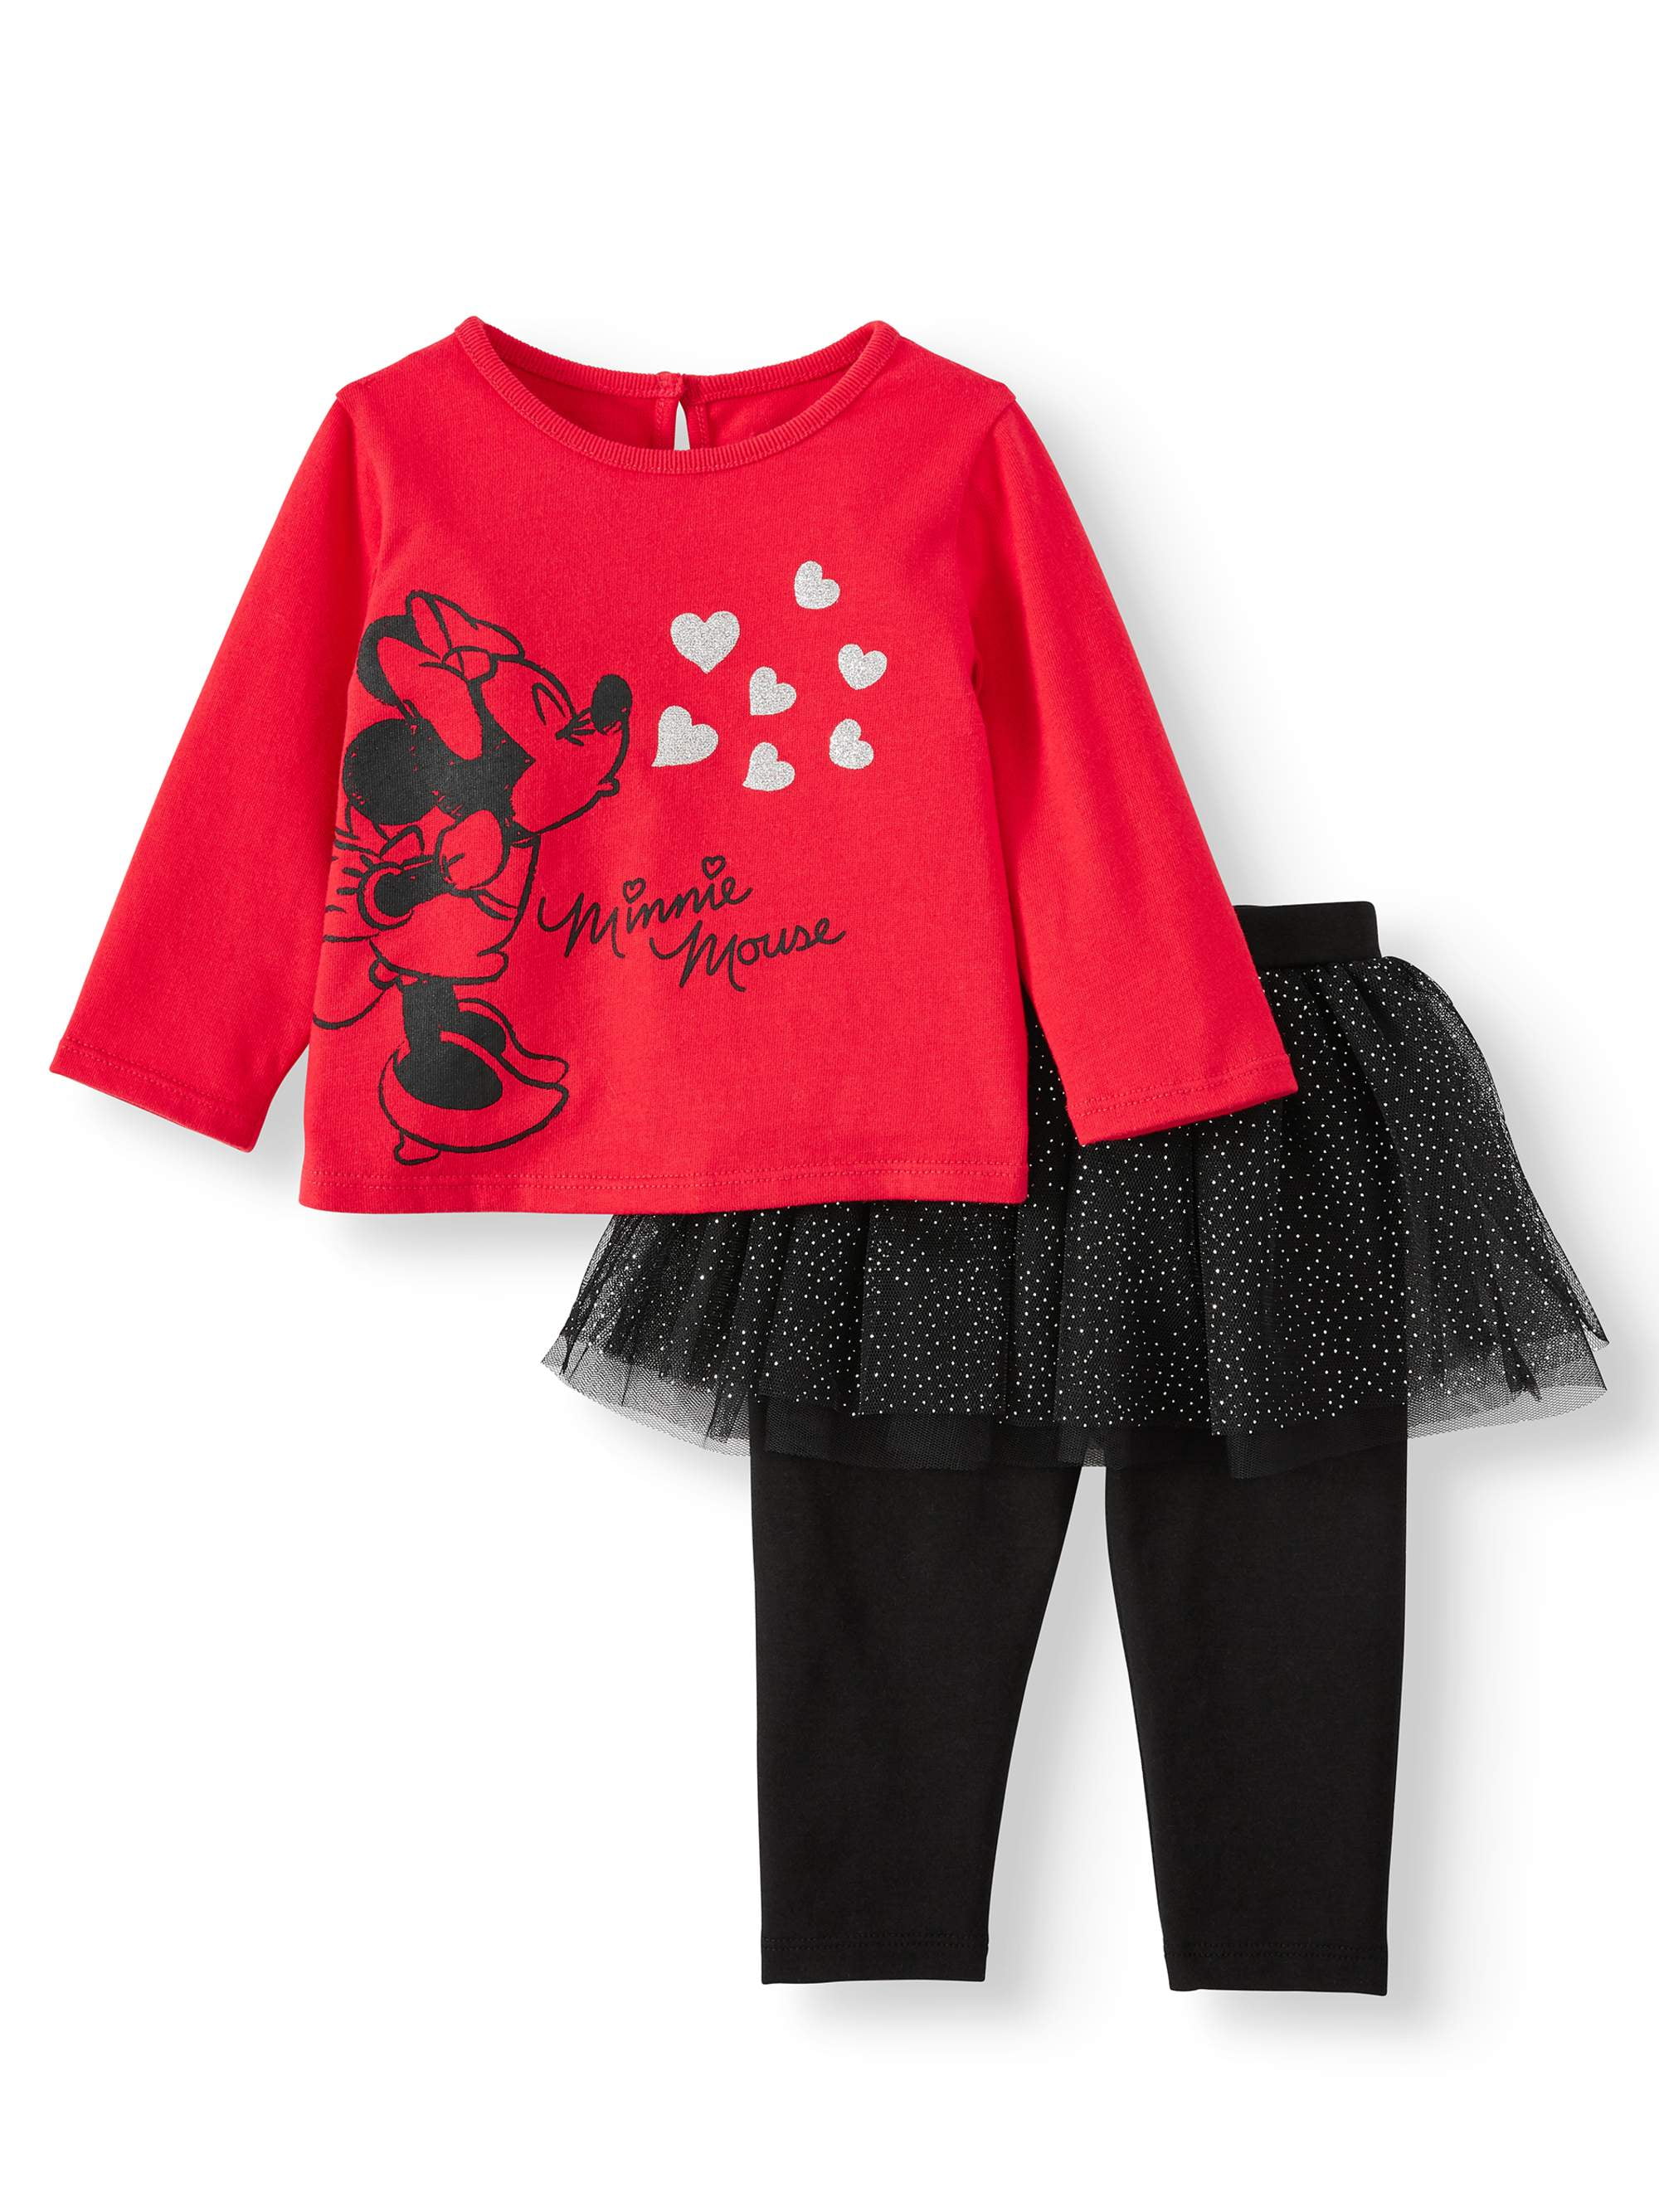 Disney Minnie Mouse Vest Long Sleeve Shirt and Legging Set Red/White/Black